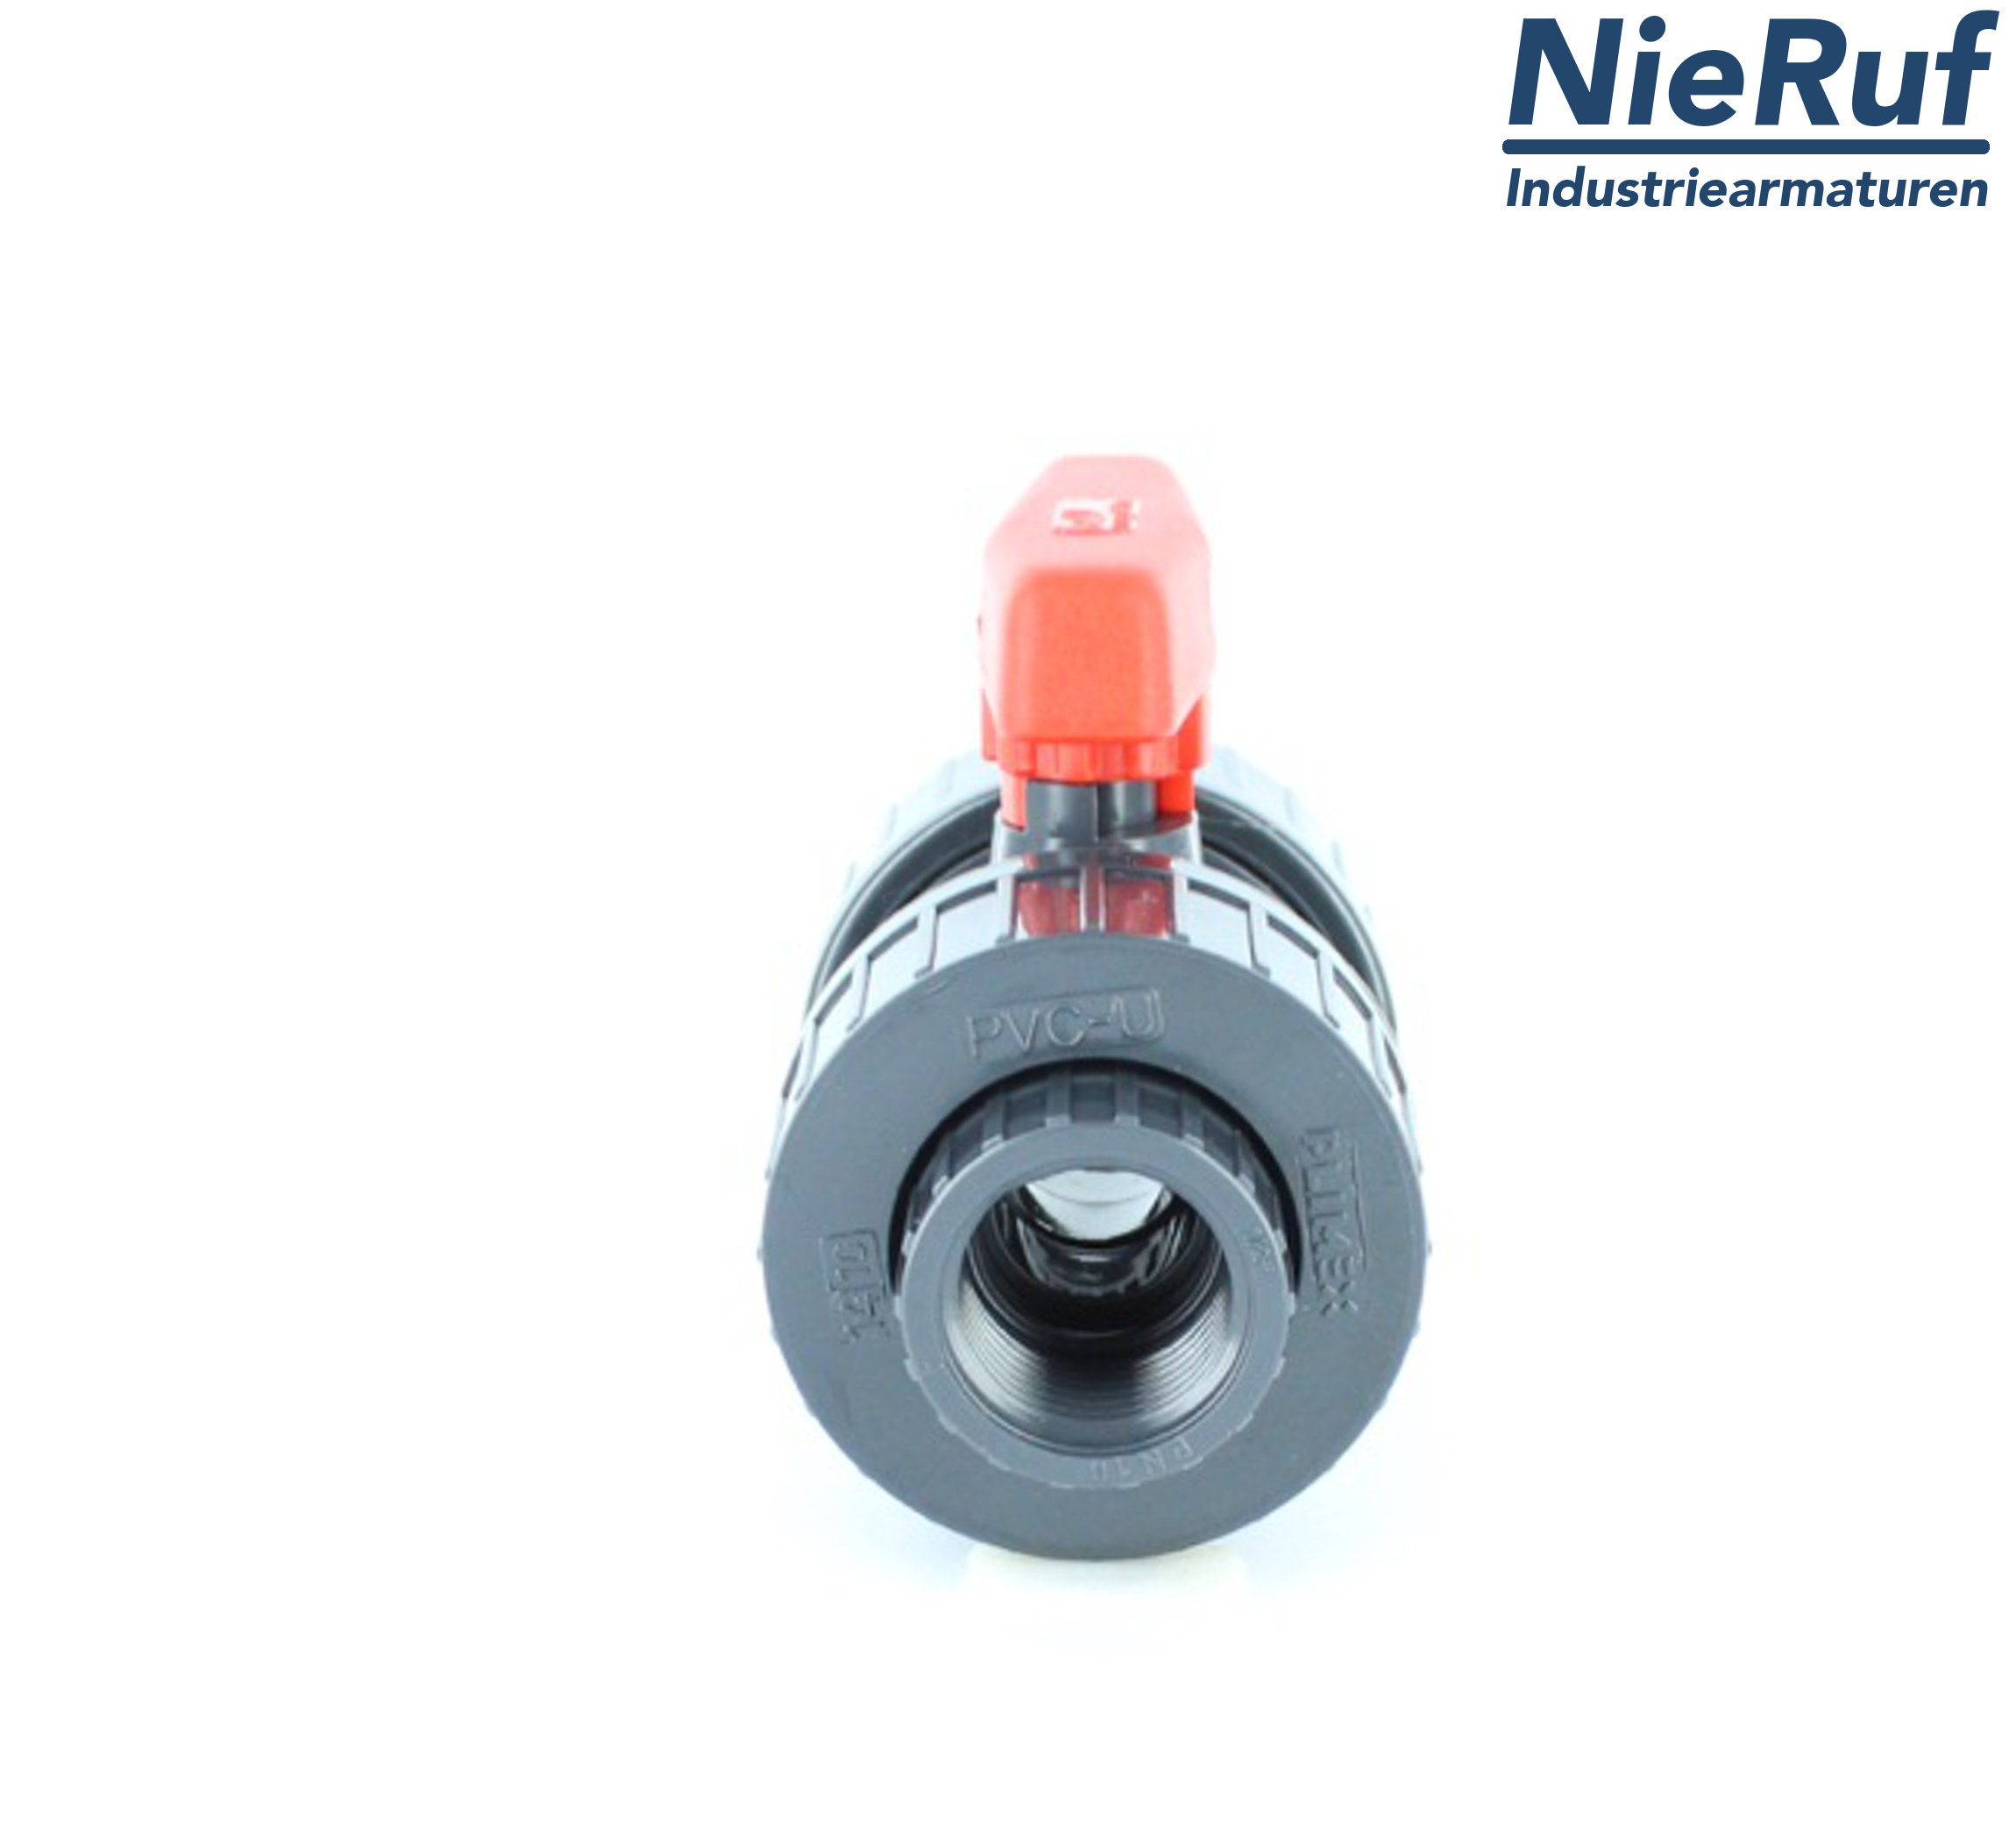 PVC-ball valve DN100 - 4" inch KK02 Hytrel/EPDM